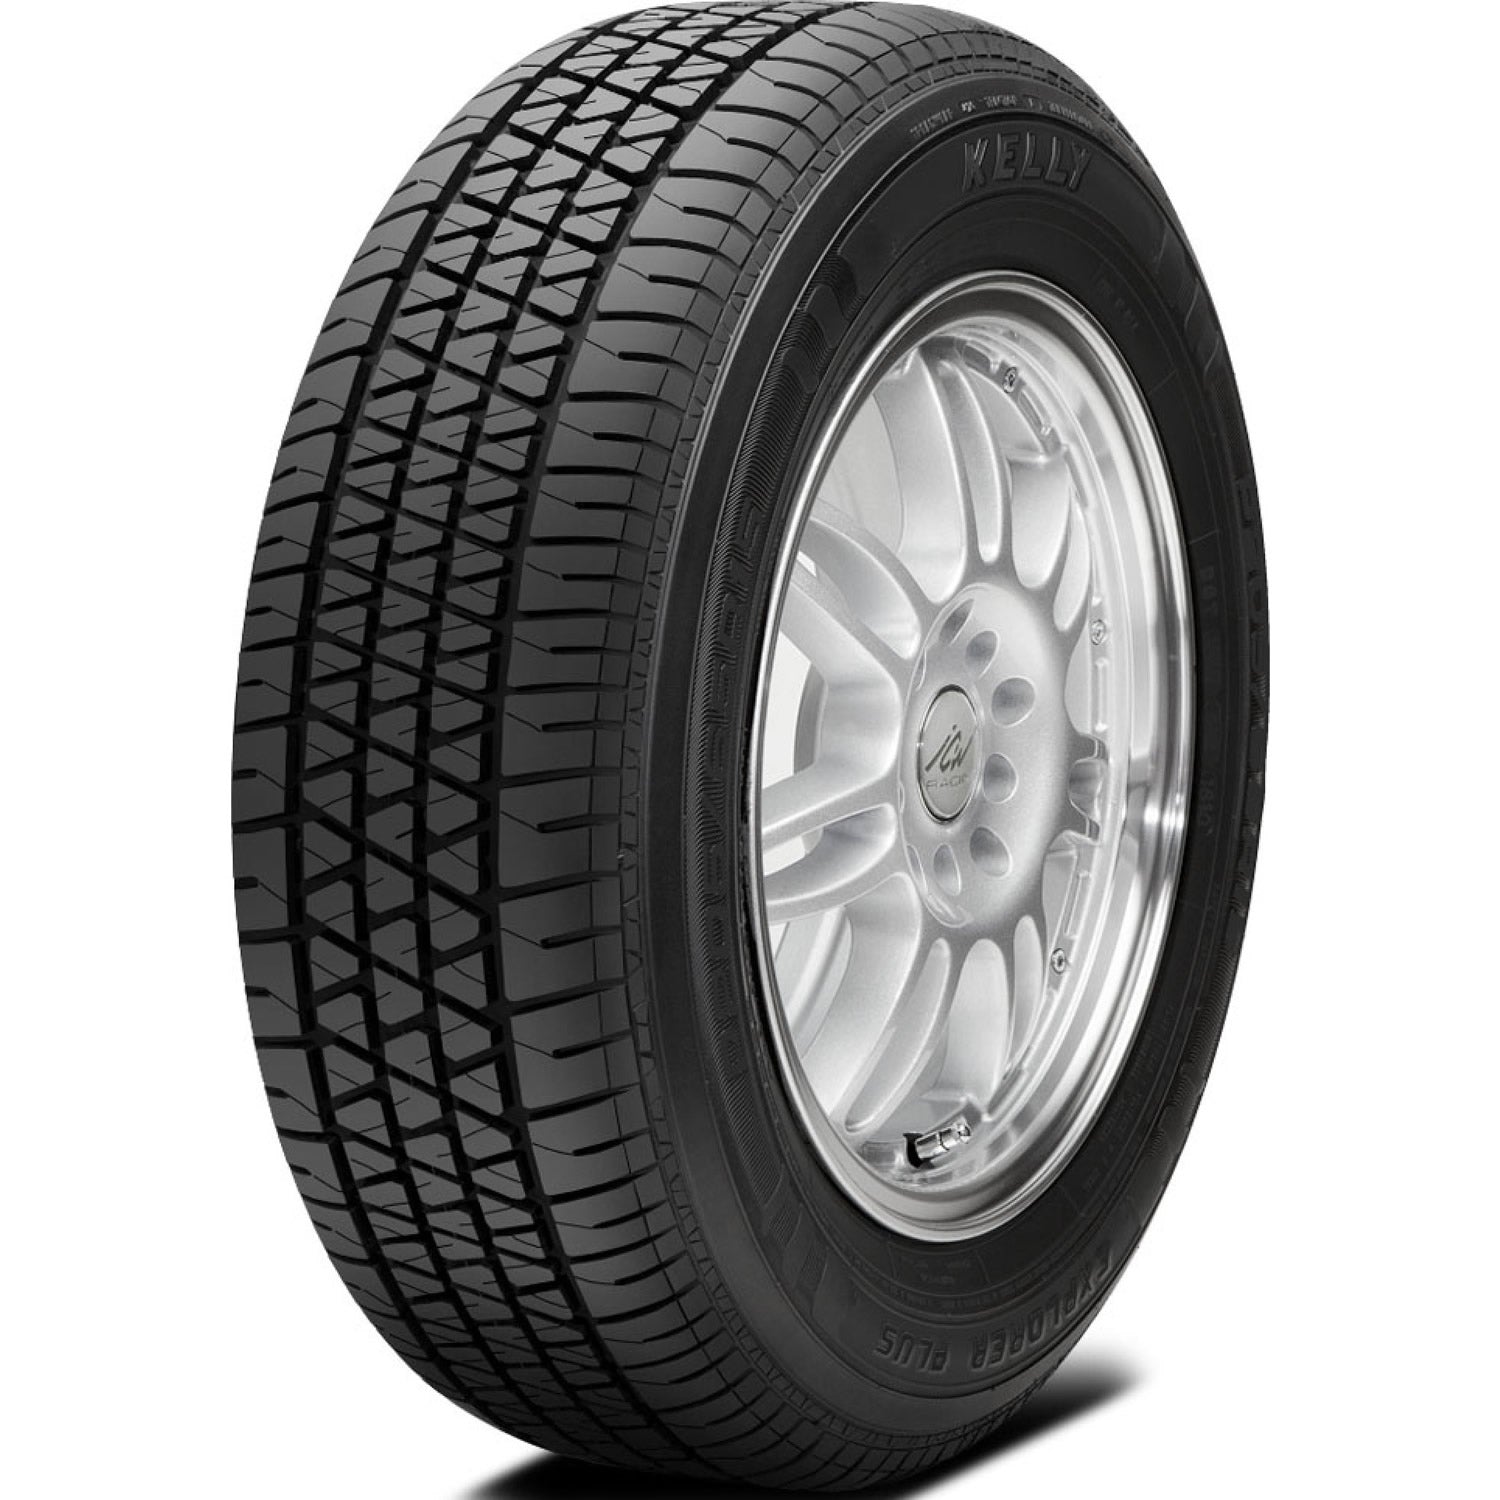 KELLY EXPLORER PLUS 205/55R16 (24.9X8.4R 16) Tires